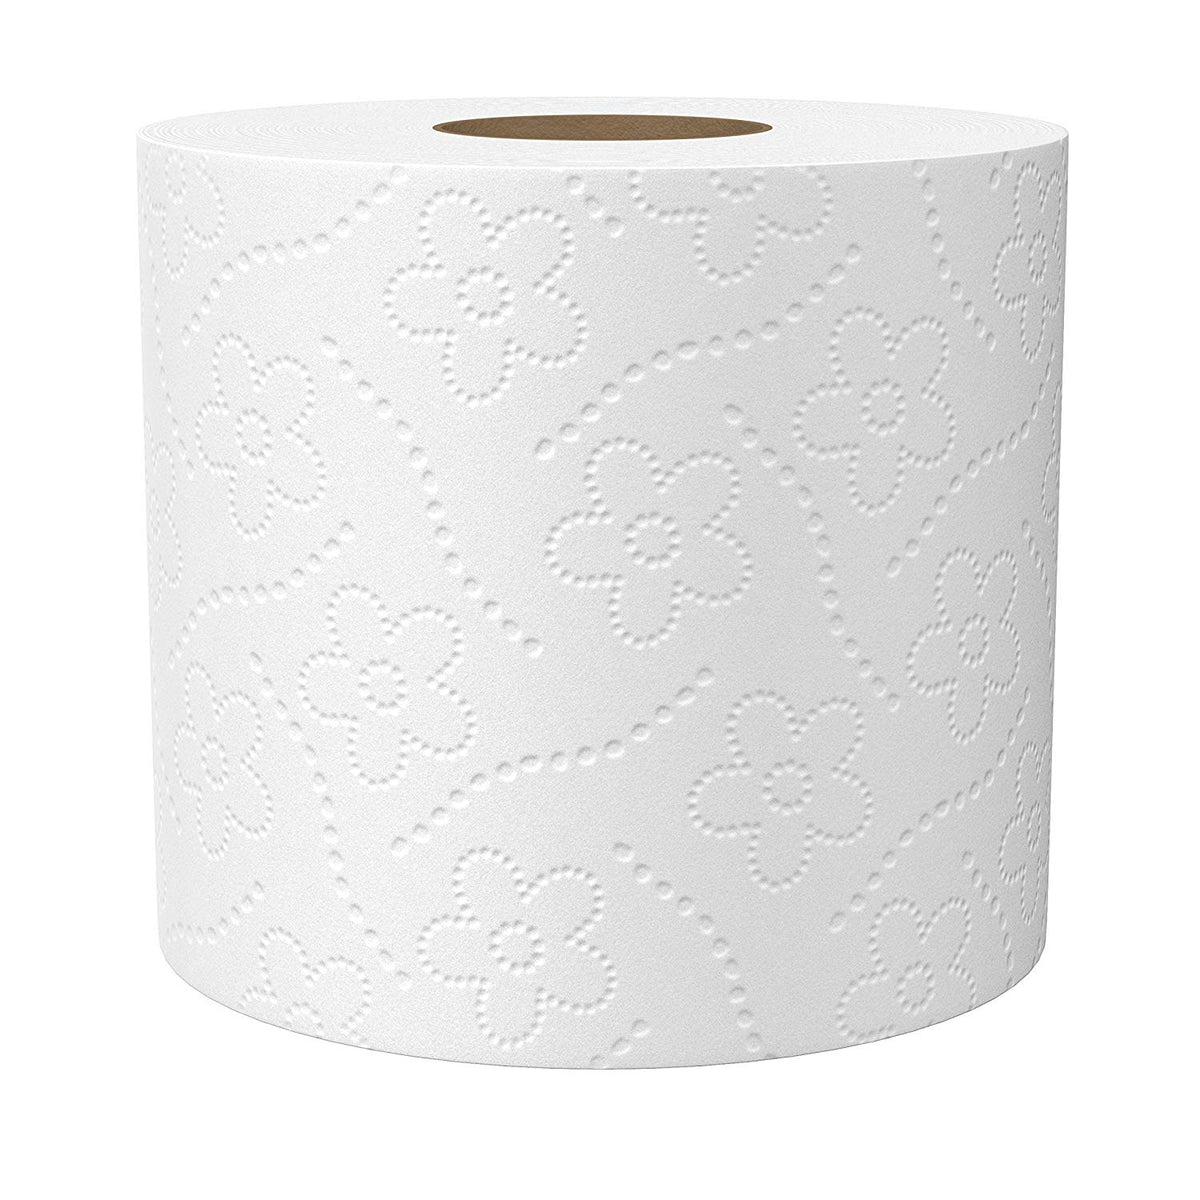 Plastic-free Toilet Paper